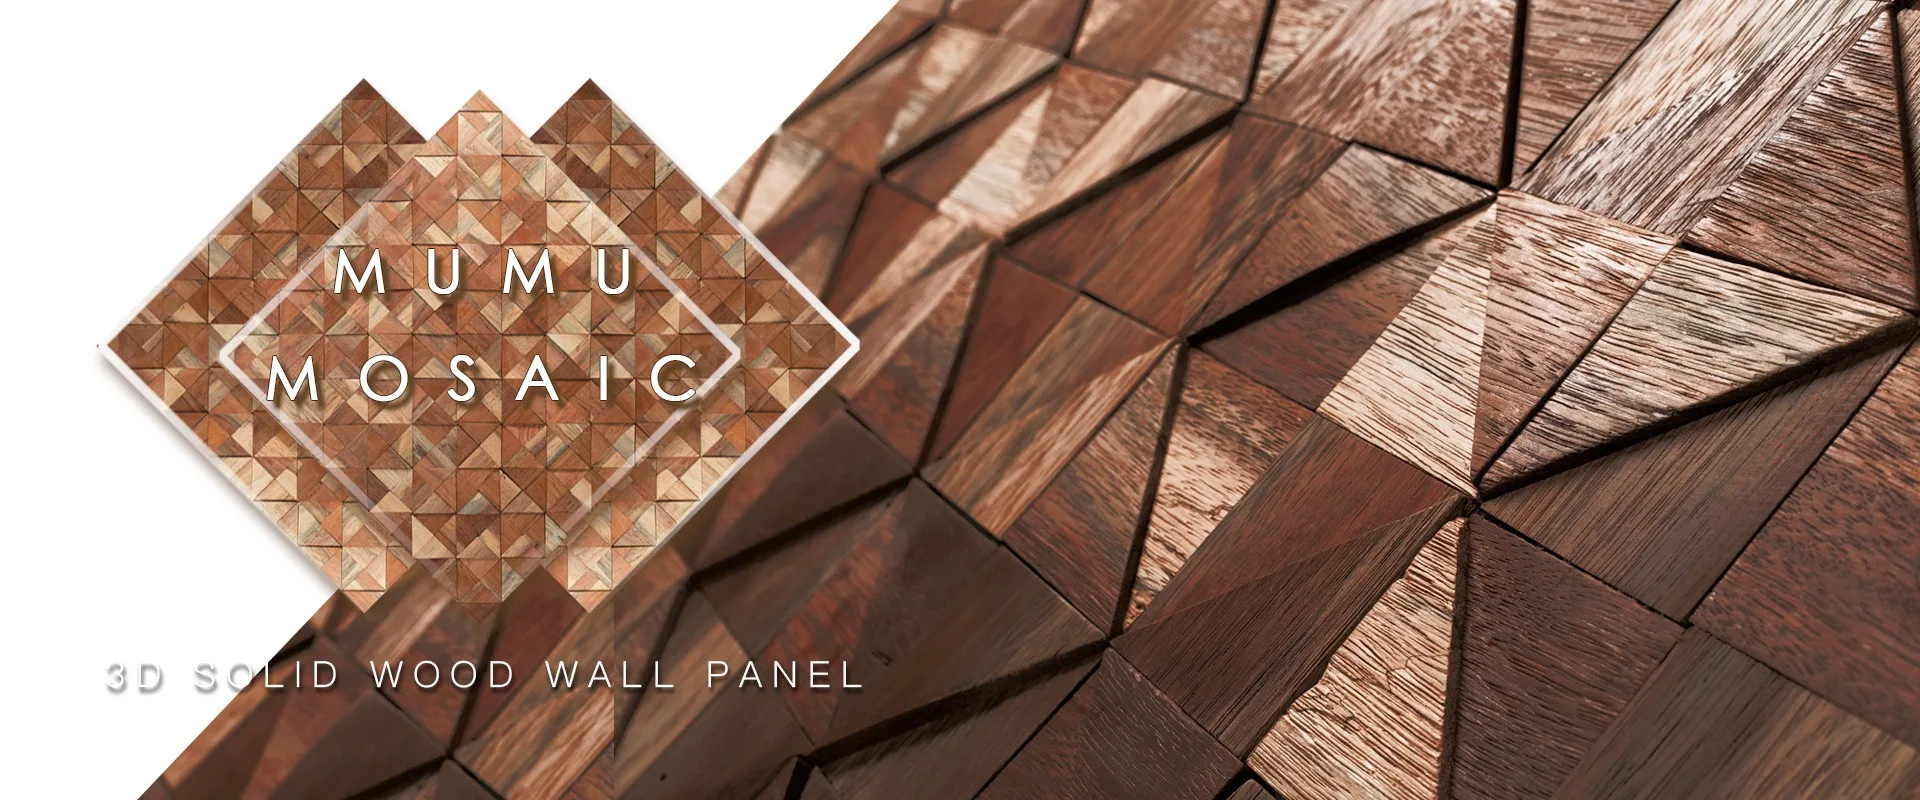 Dongguan Mumu Woodwork Co Ltd Solid Wood Decorative Panel Outdoor Wall Panel Wooden Divider